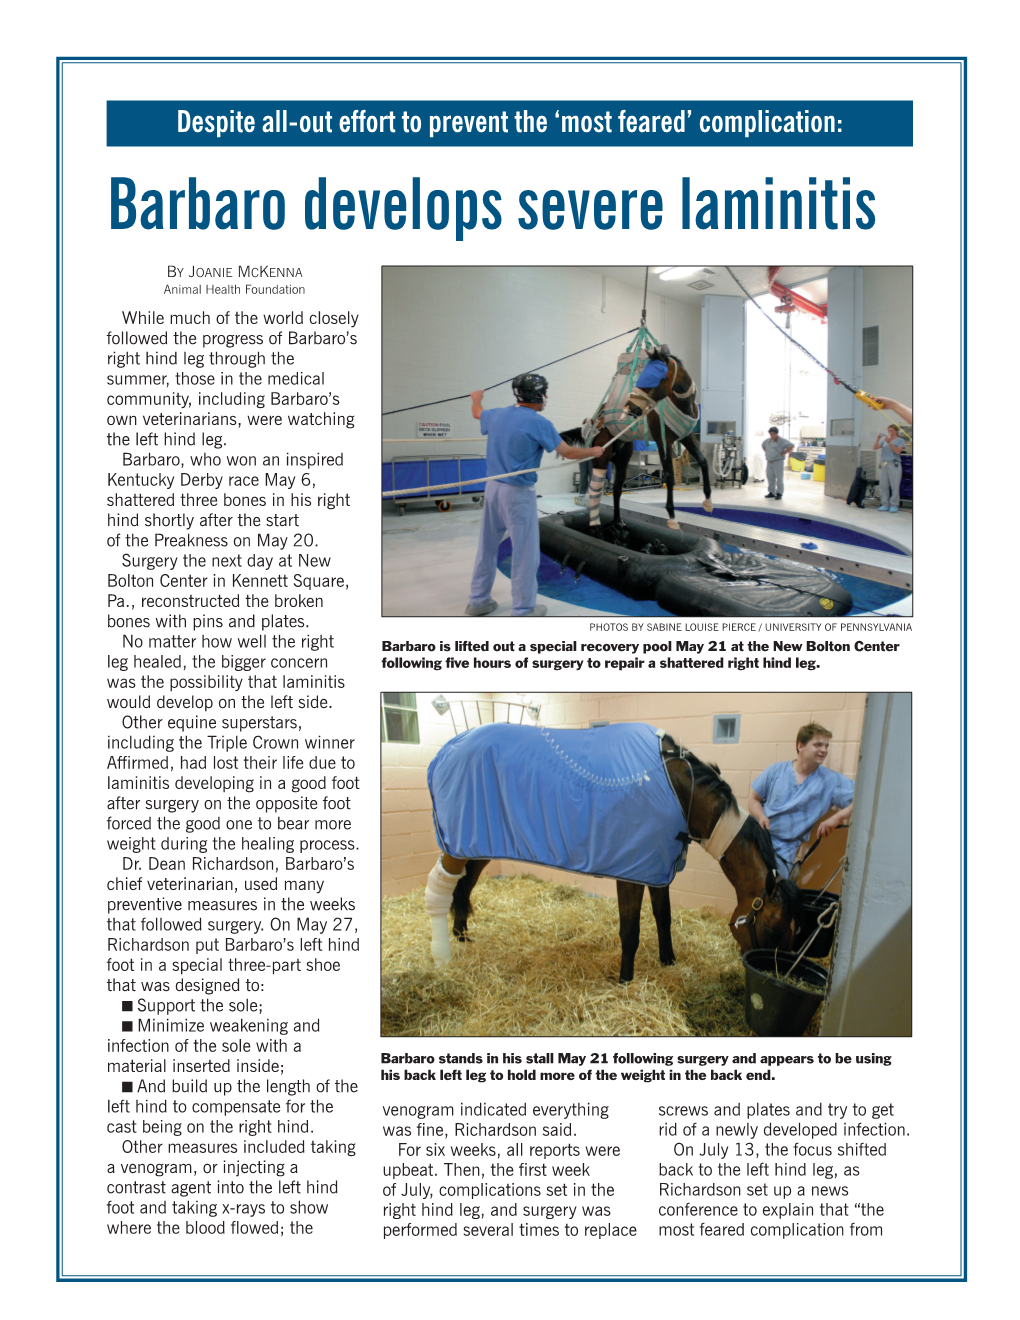 Barbaro Develops Severe Laminitis